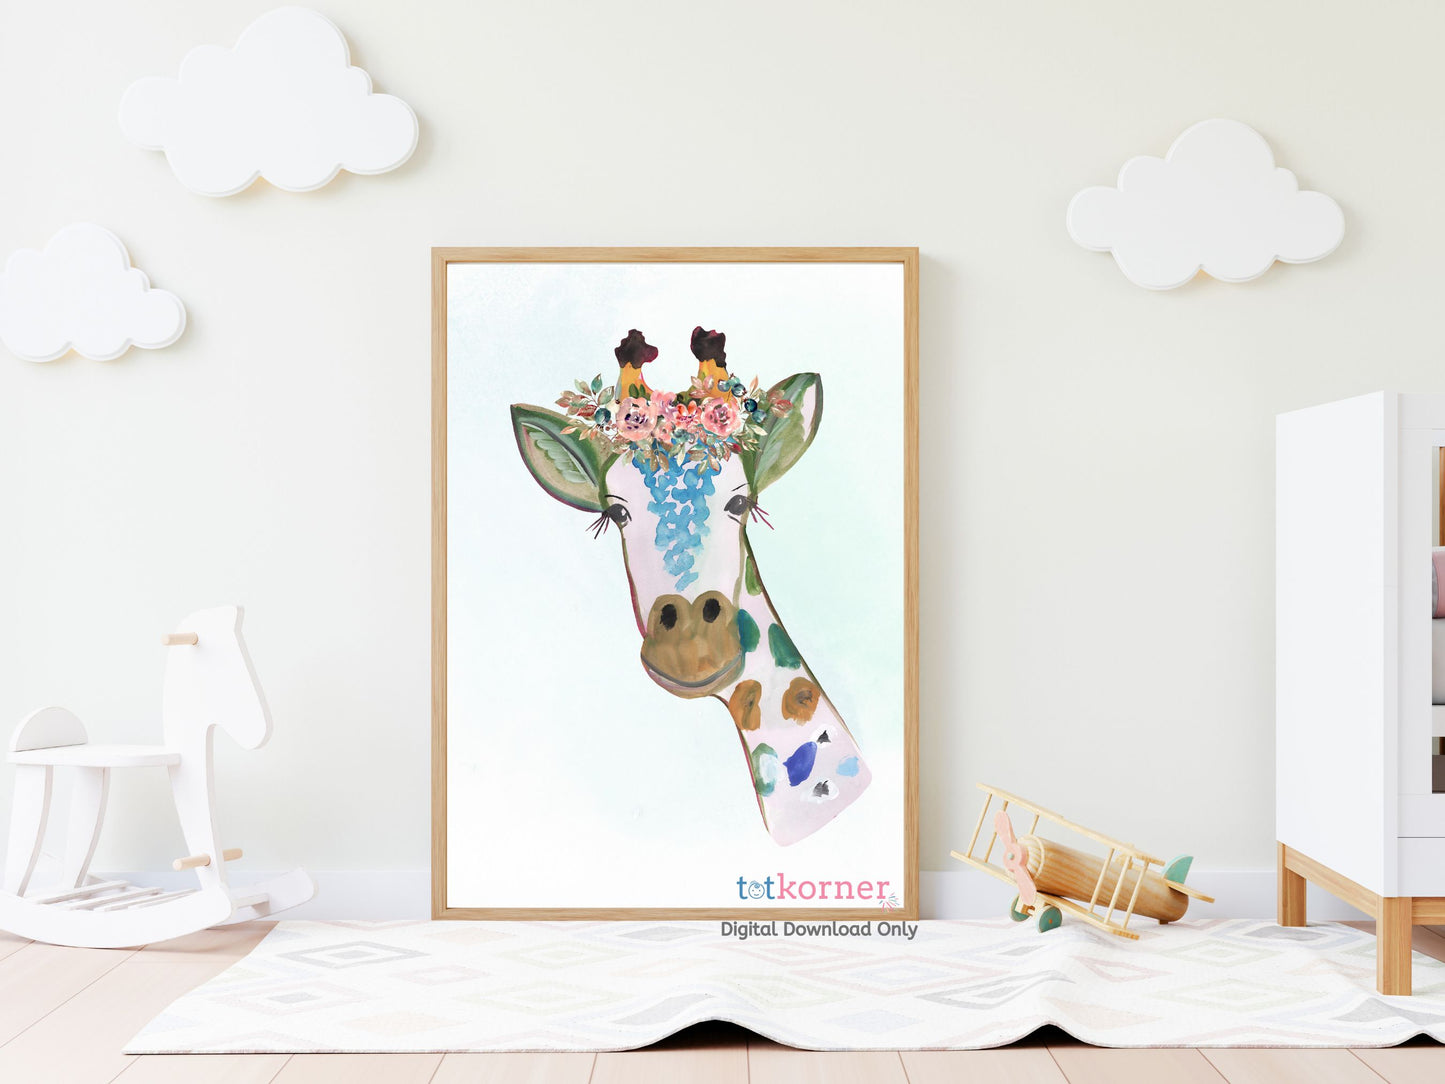 giraffe gift | babyshower gift | baby shower gift | animal printable | animal prints | digital wall art decor